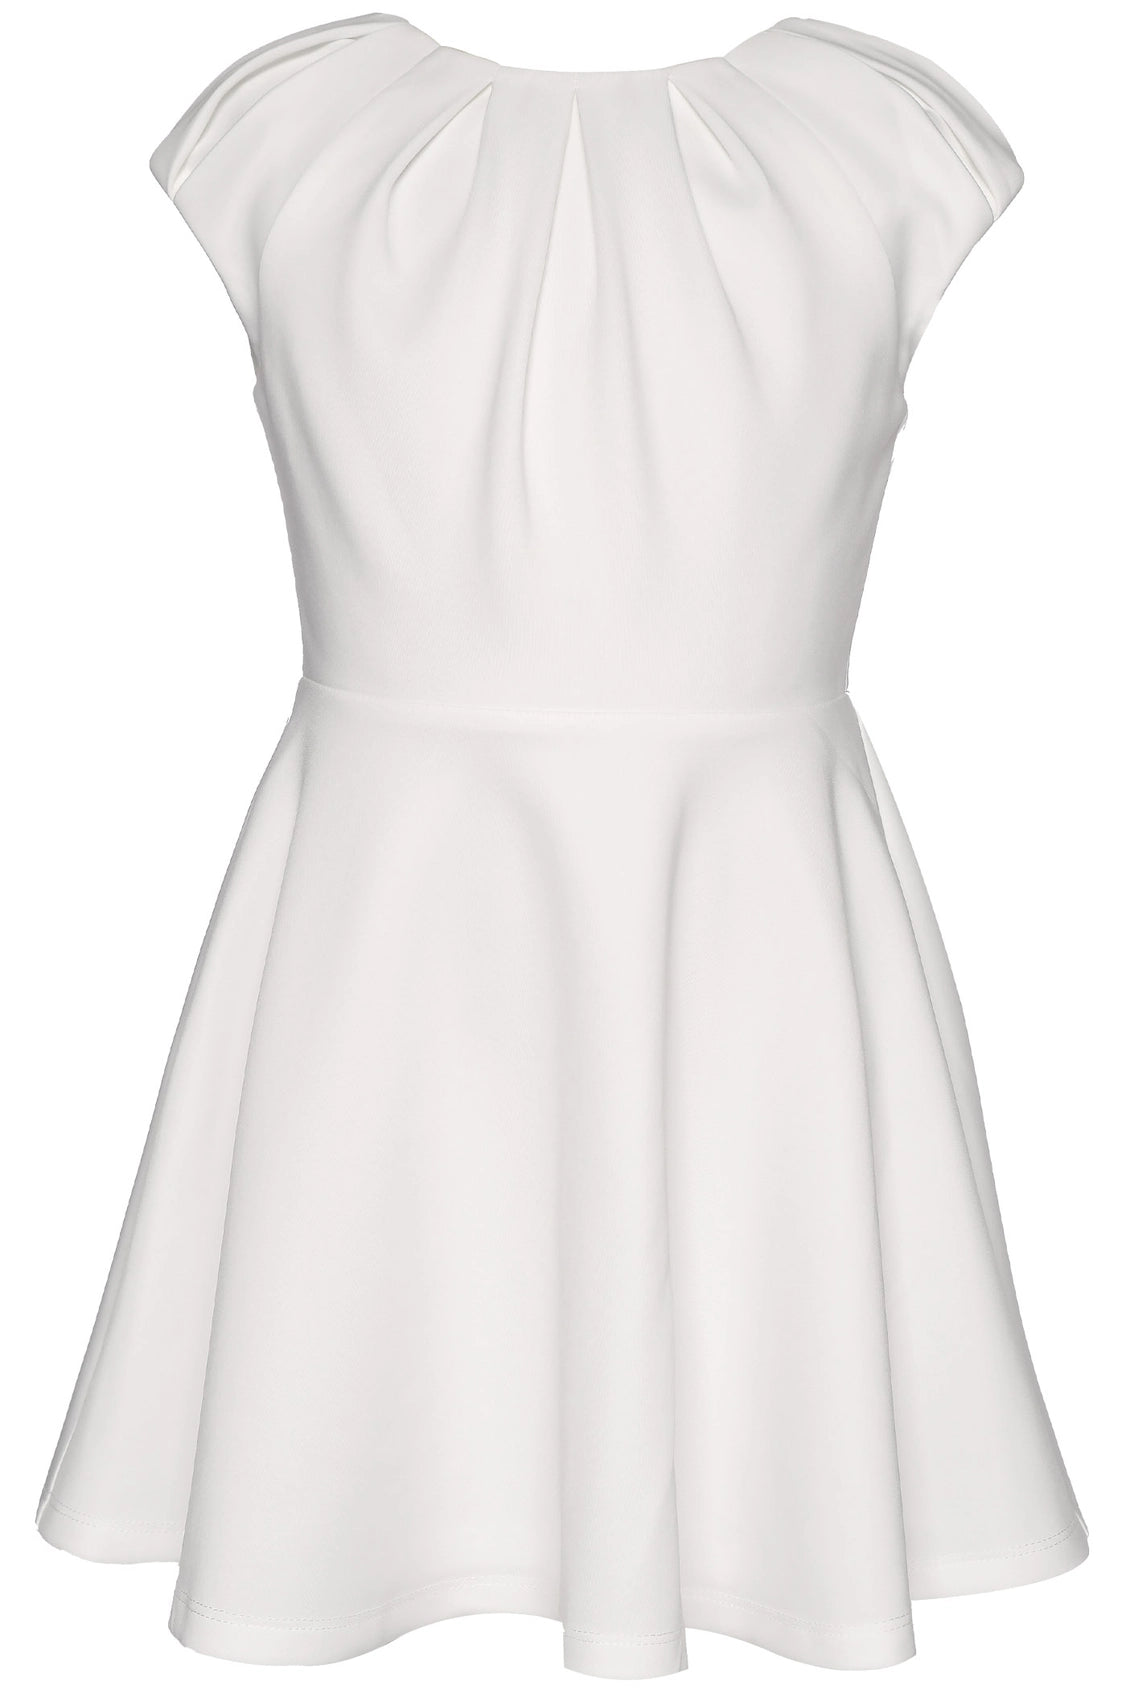 Fit & Flare White Scuba Dress